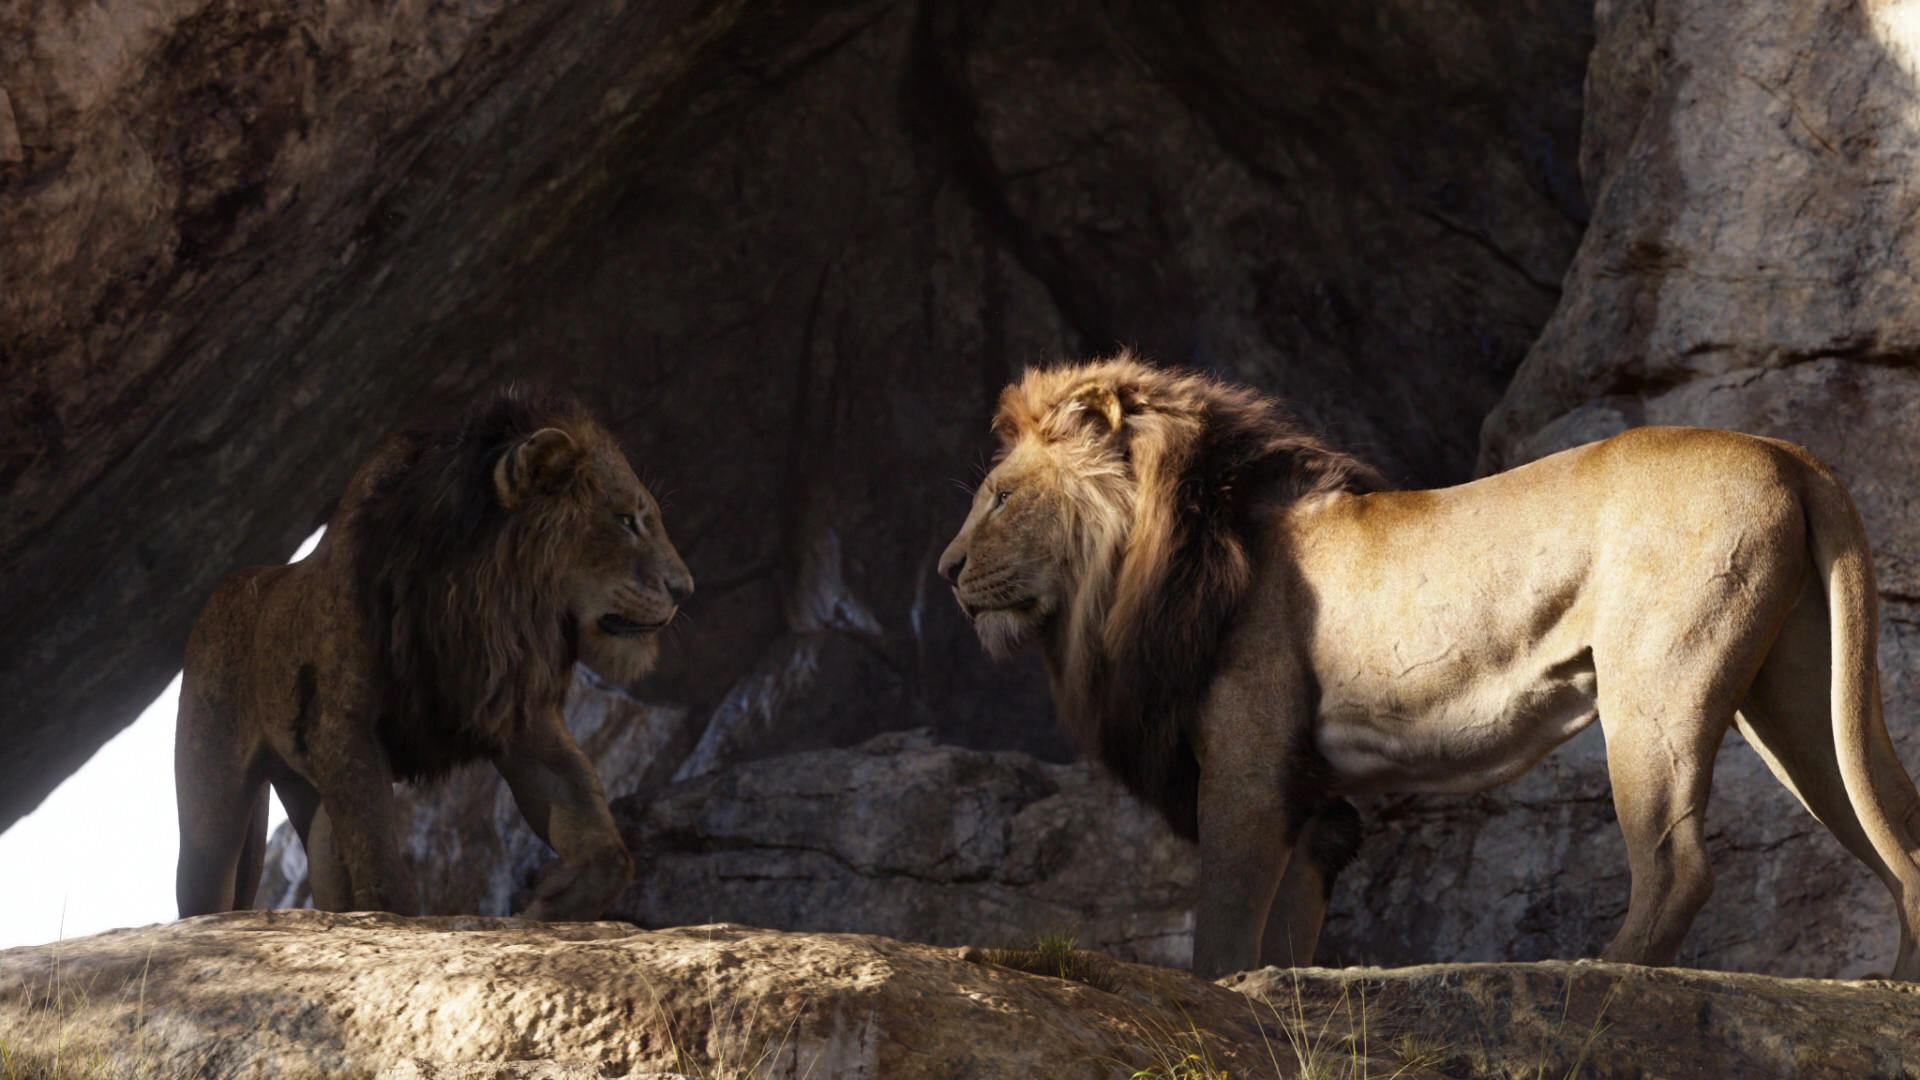 Mufasa 19 Film The Lion King Wiki Fandom